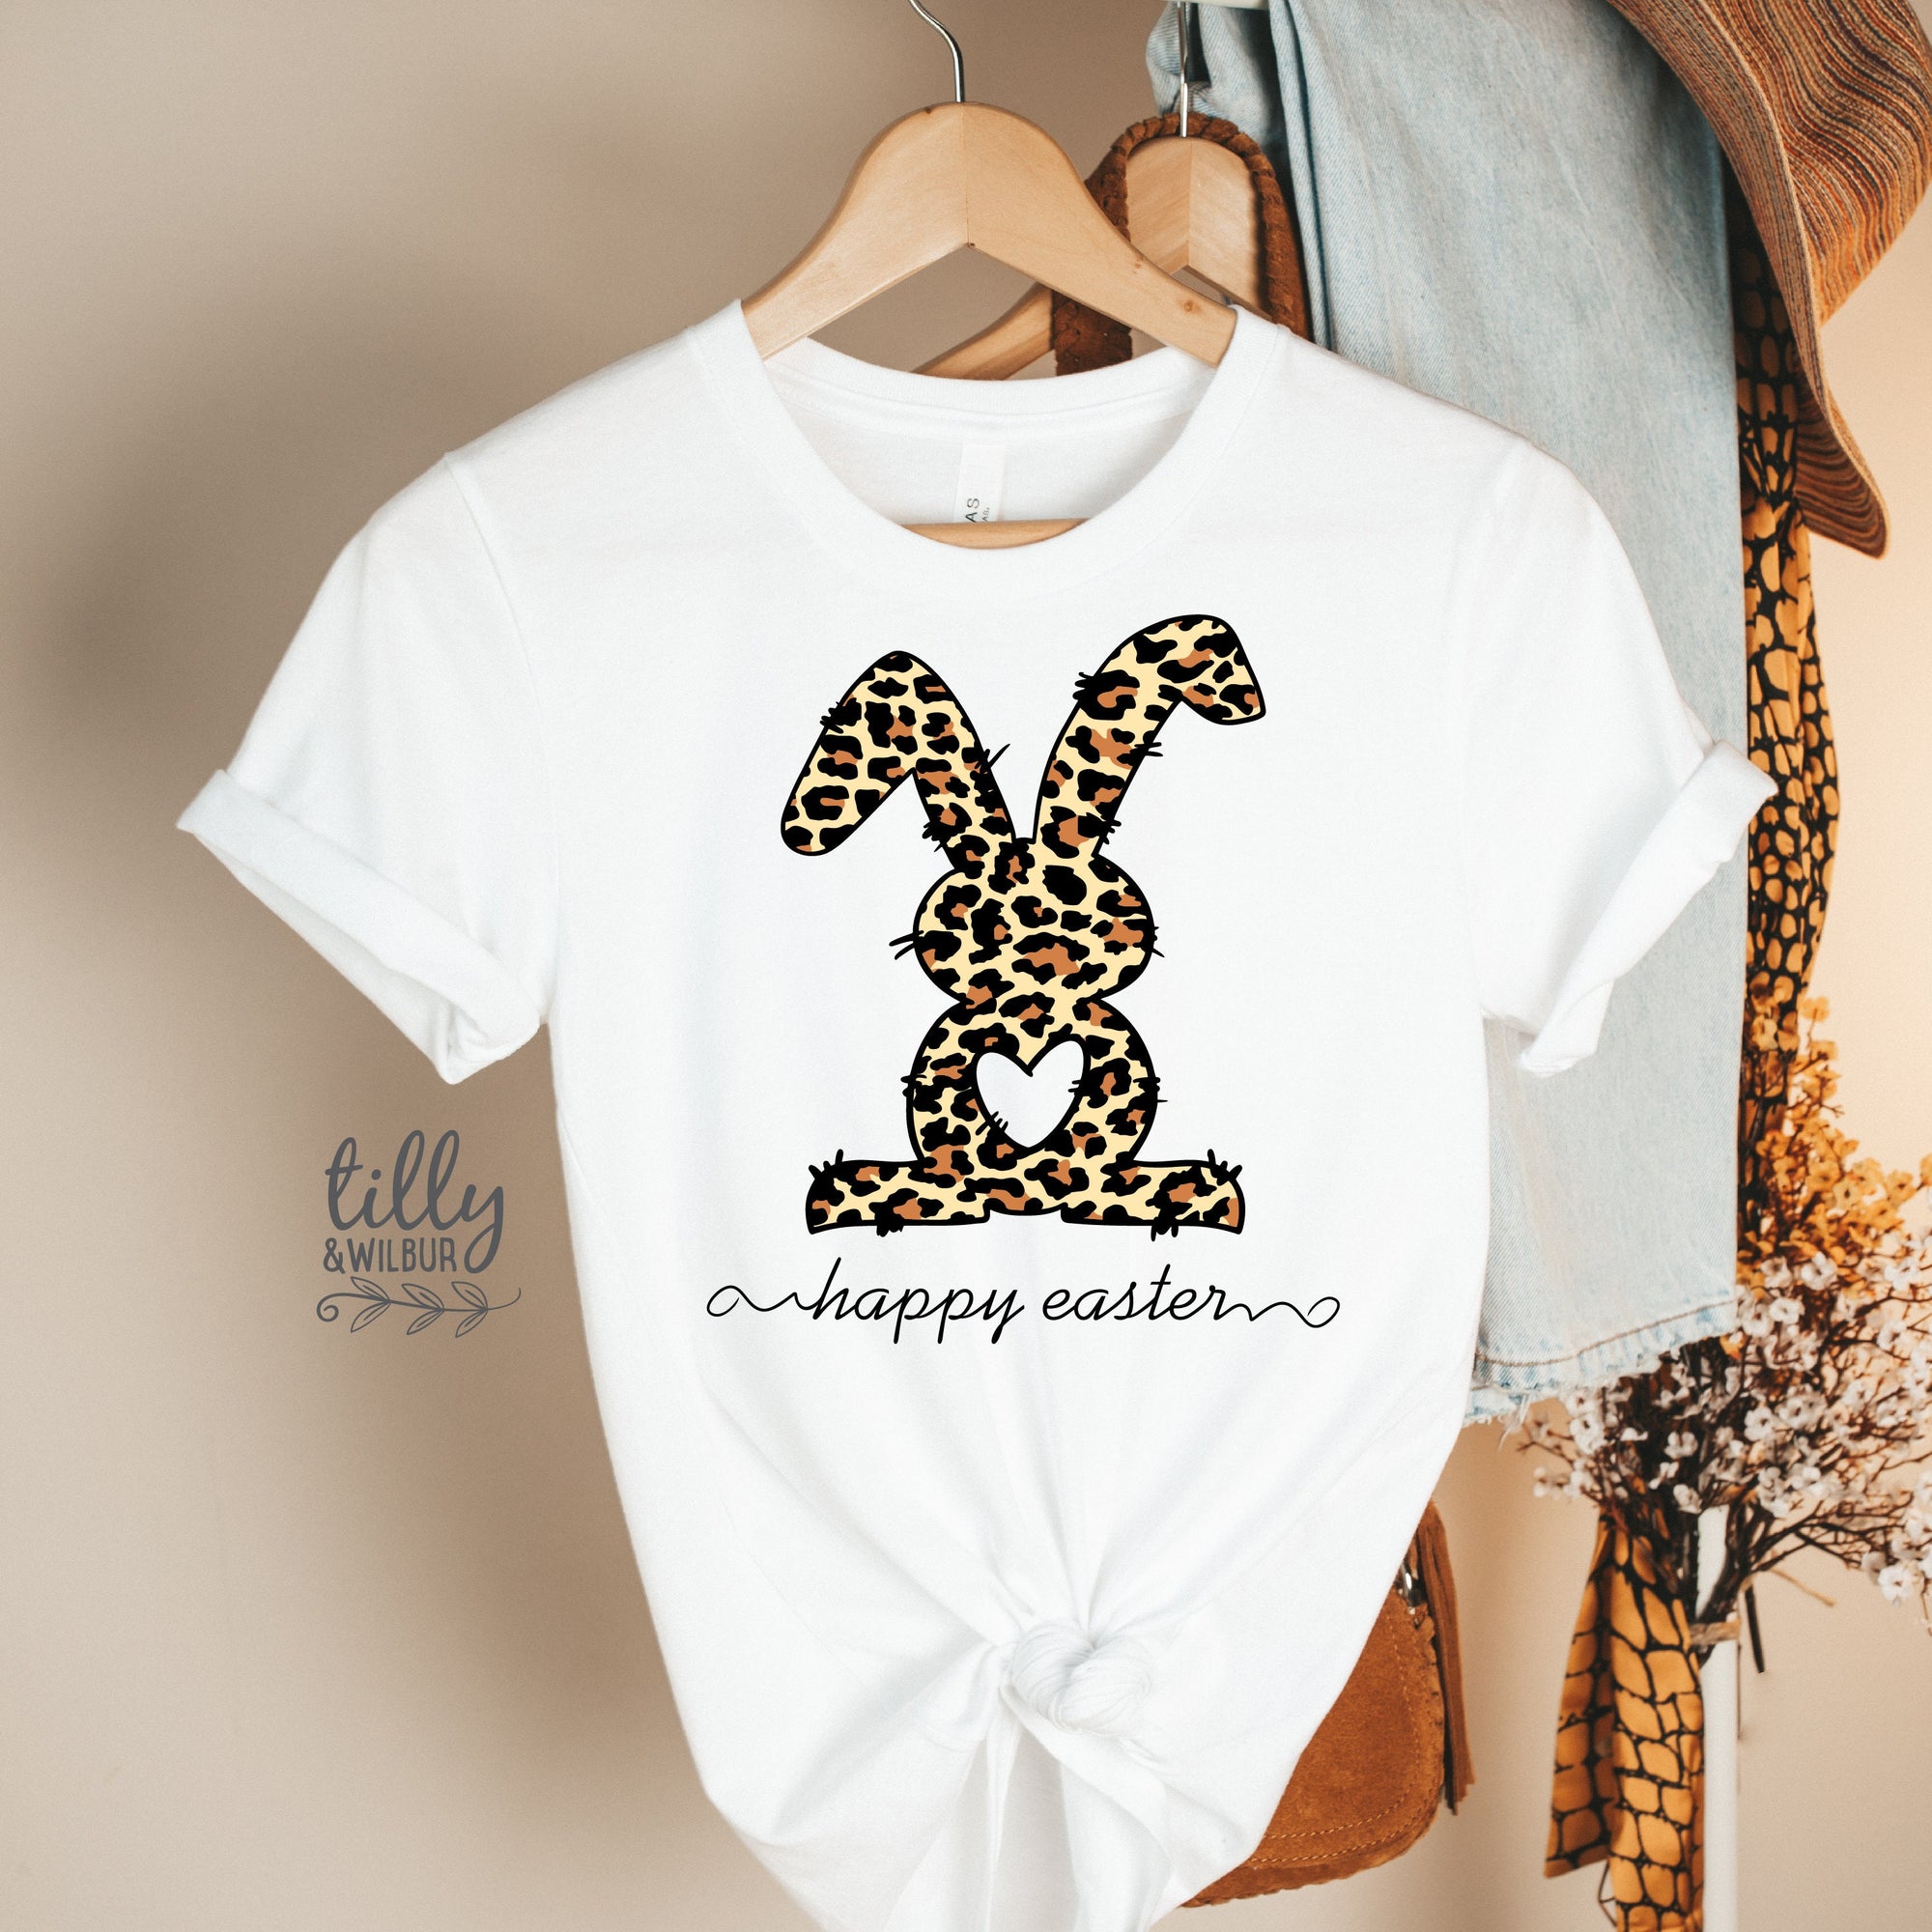 Happy Easter T-Shirt, Leopard Print Bunny Rabbit, Easter T-Shirt, Easter Gift, Easter Shirt, Hippity Hop T-Shirt, Easter Egg Hunt Shirt